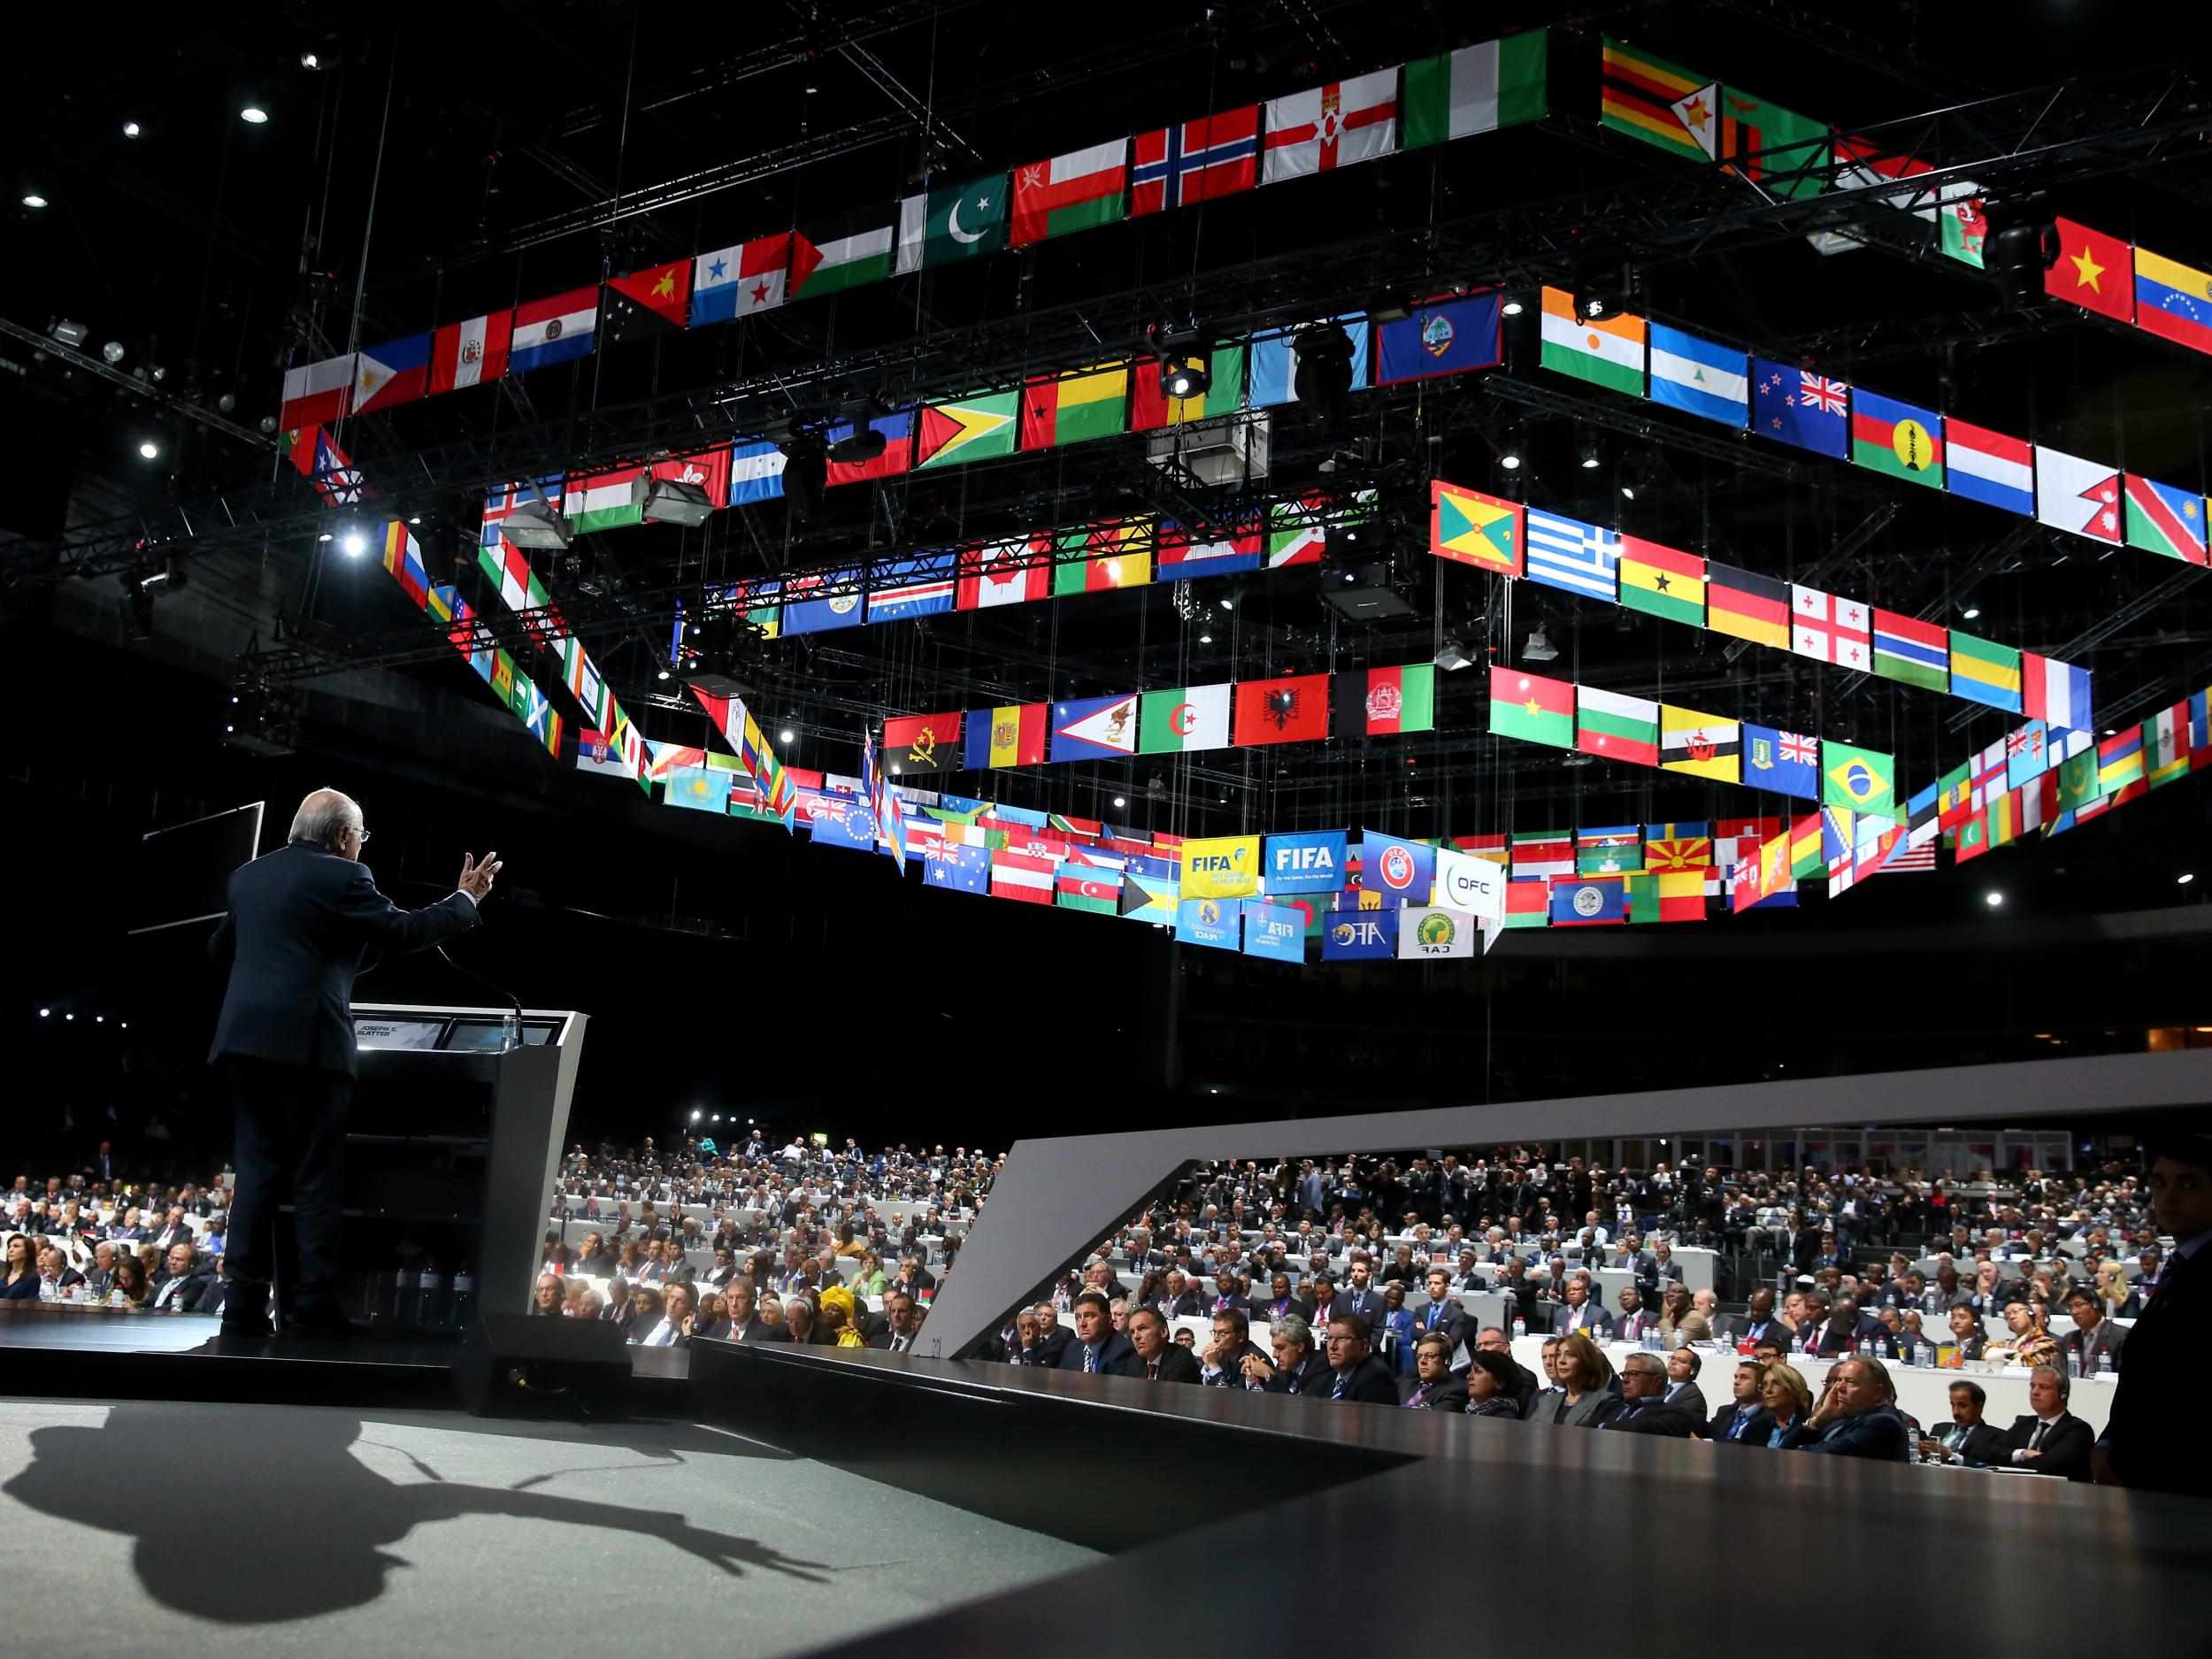 Sepp Blatter addresses the Fifa congress in 2015